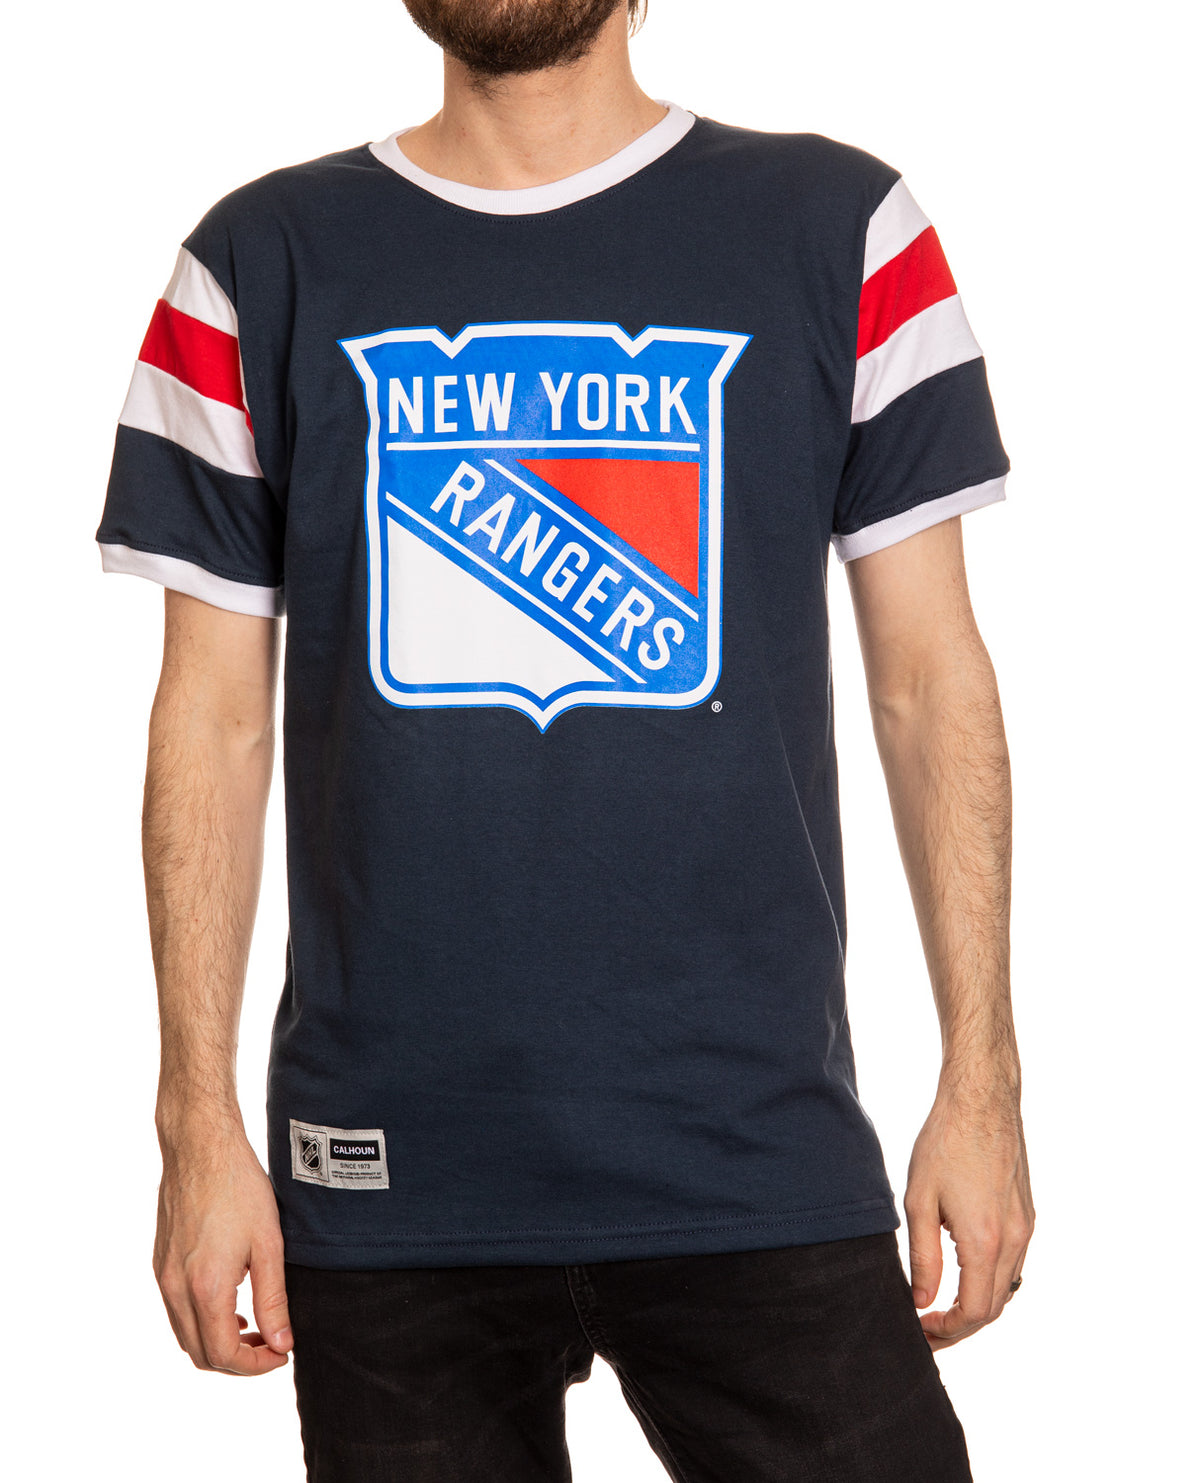 New York Rangers Varsity T-Shirt Front View